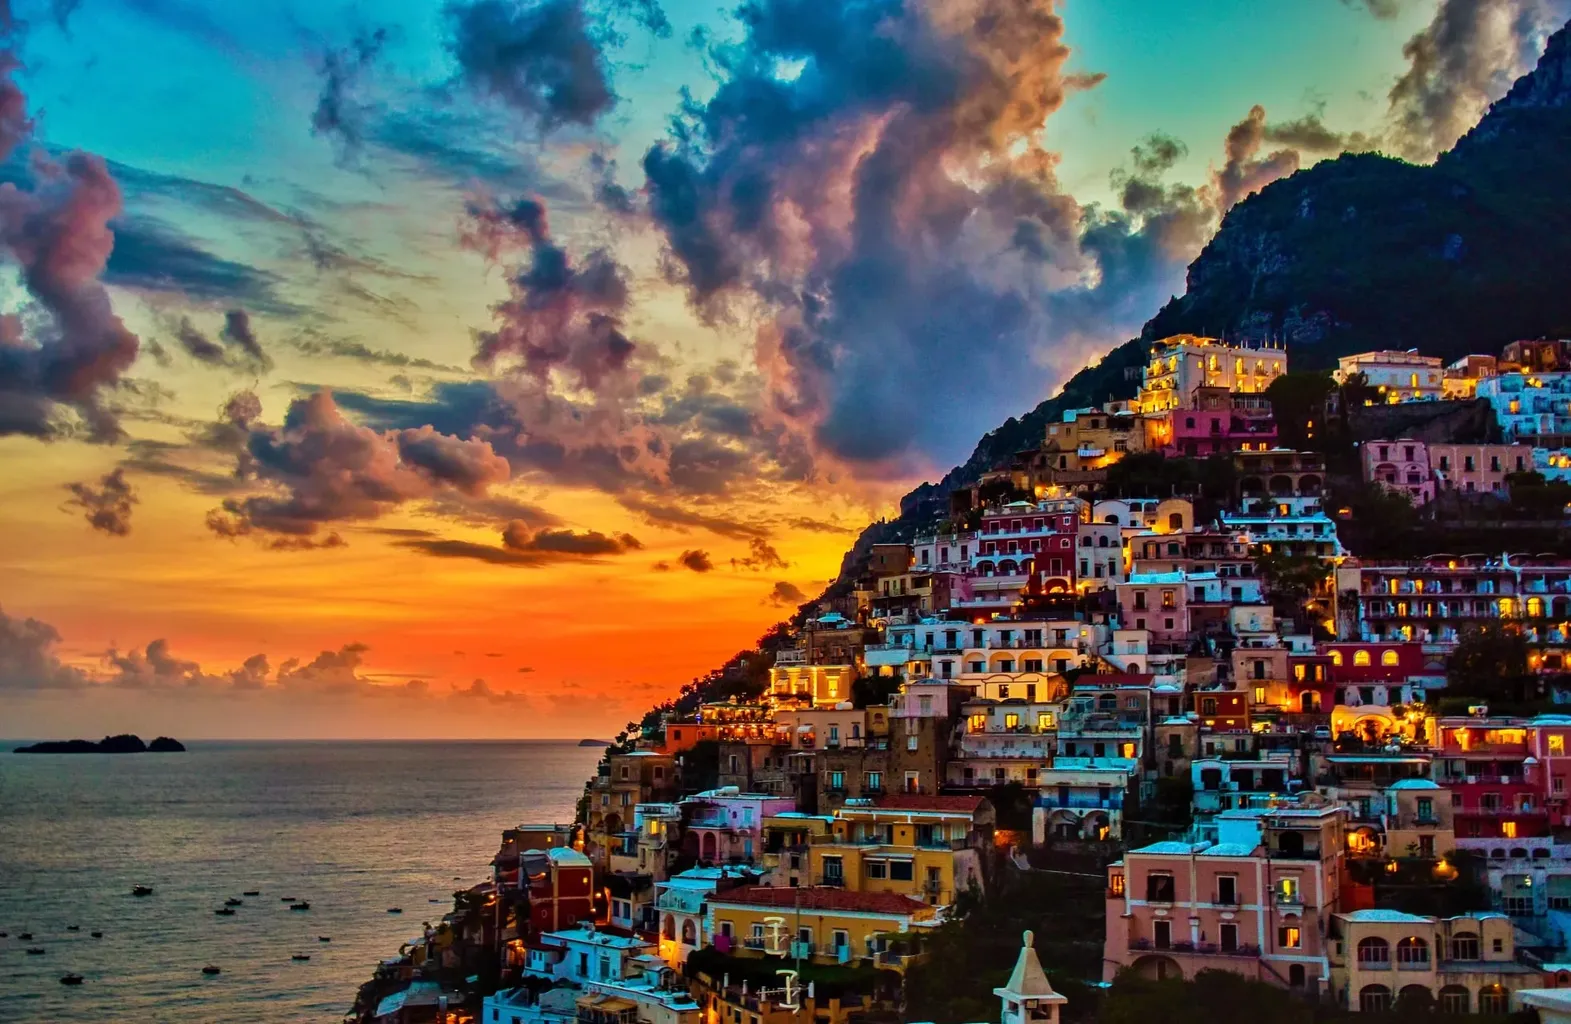 Amalfi | Campania Region, Italy - Rated 3.5